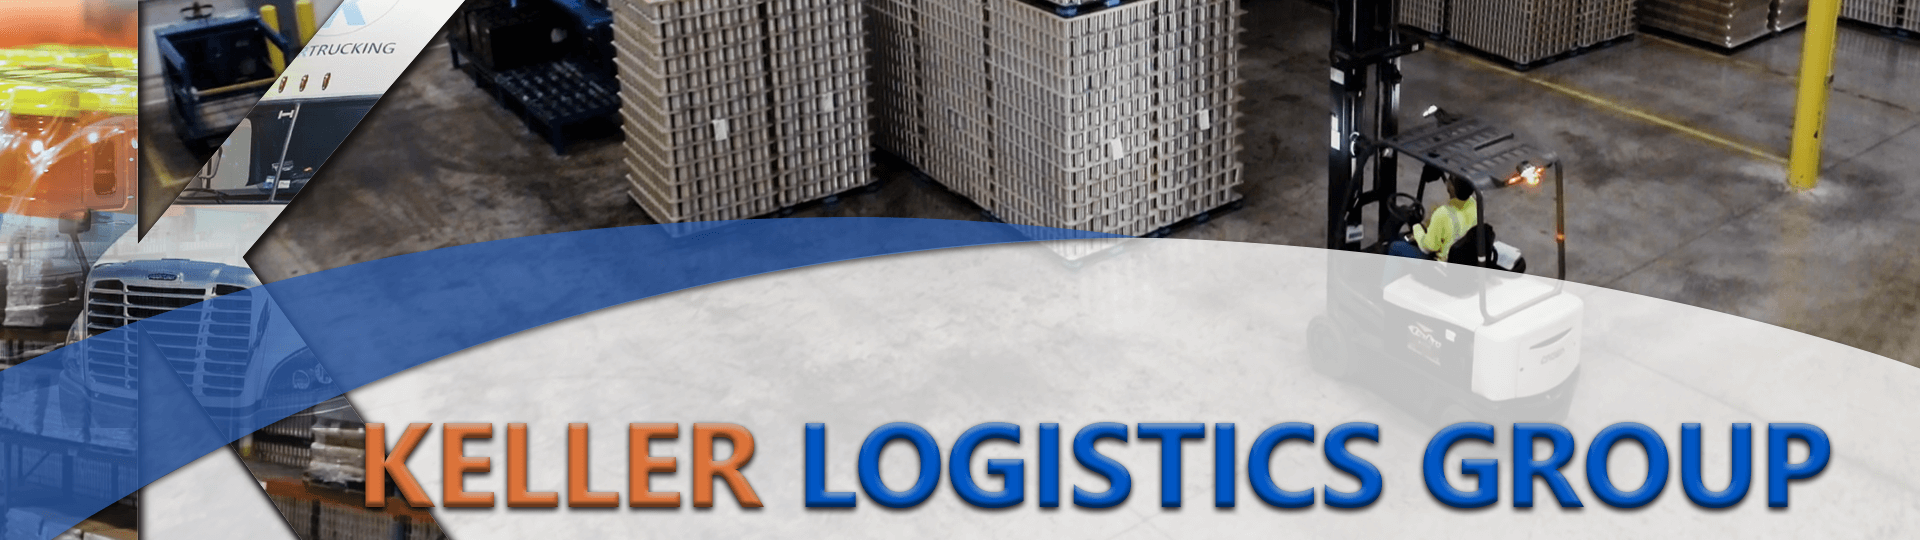 Keller Logistics Group Home Page